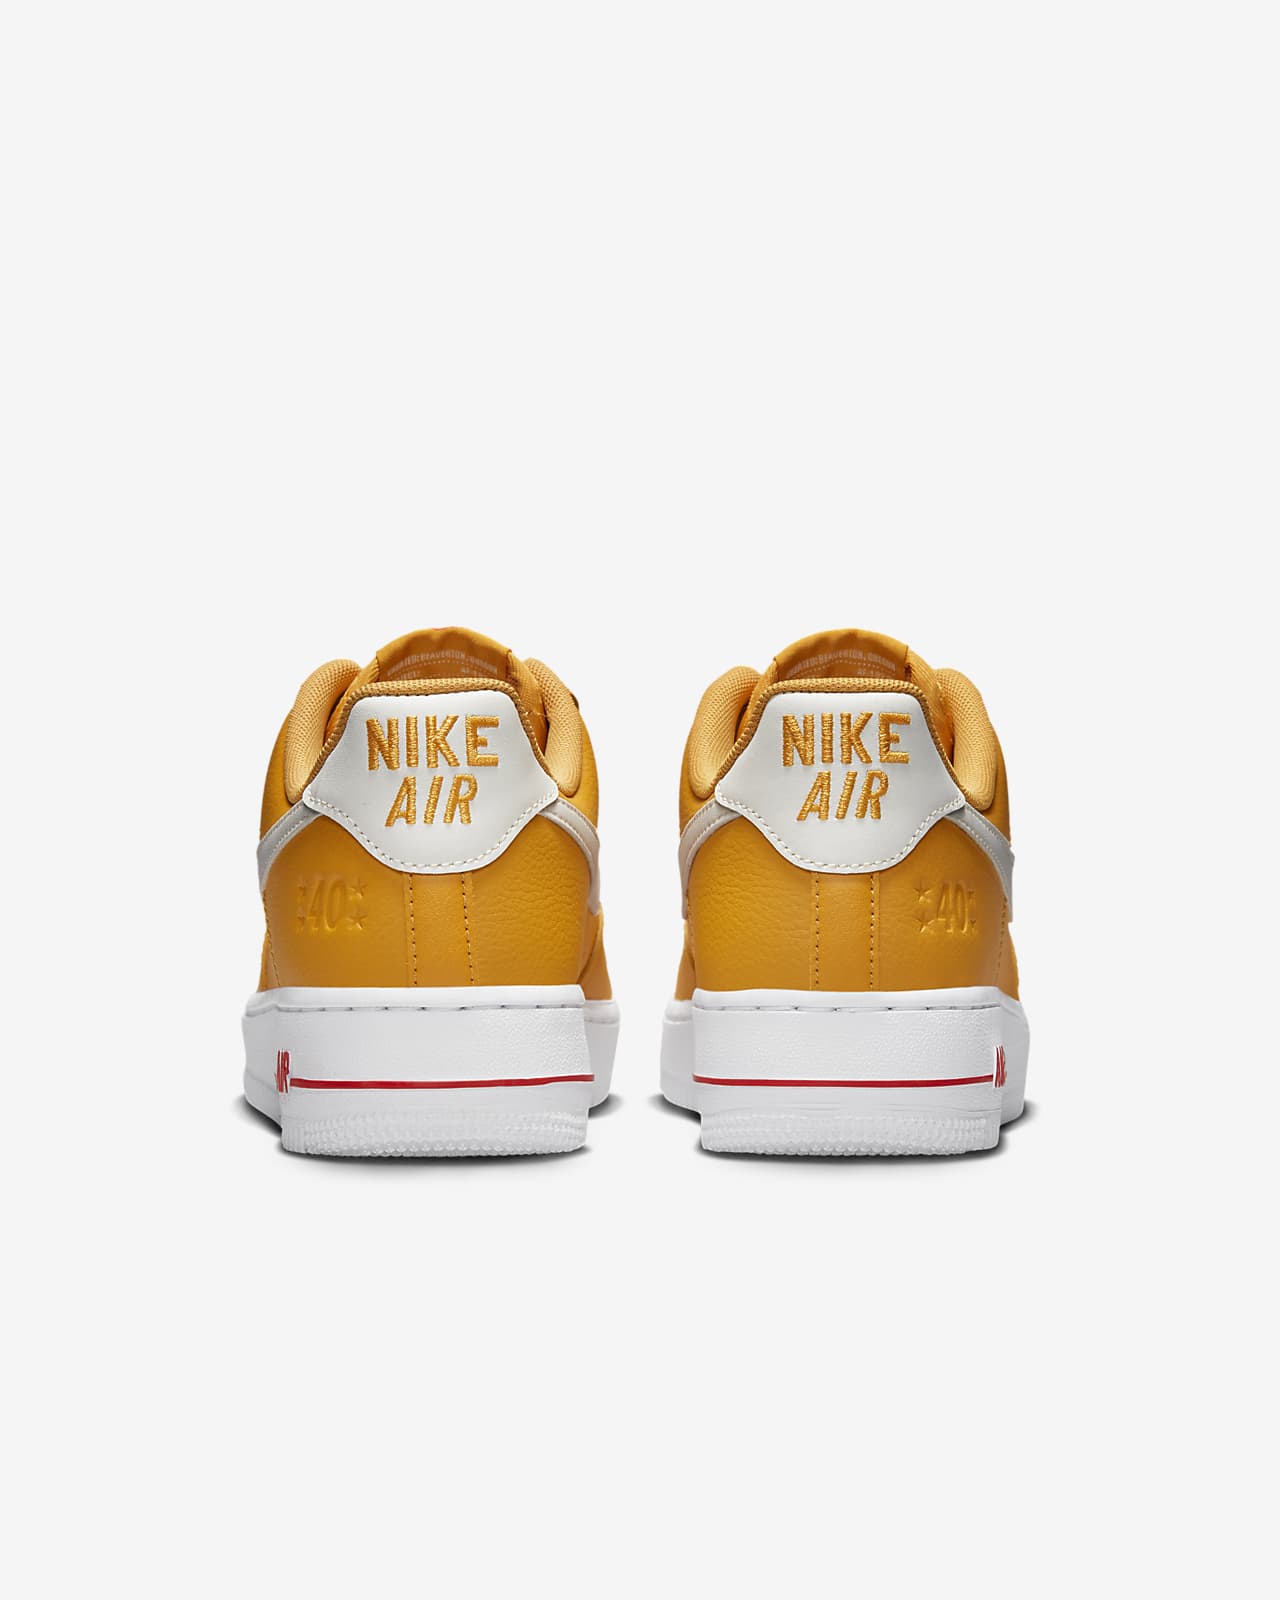 Nike Women's Air Force 1 '07 Shoes, Size 7.5, White/Orange